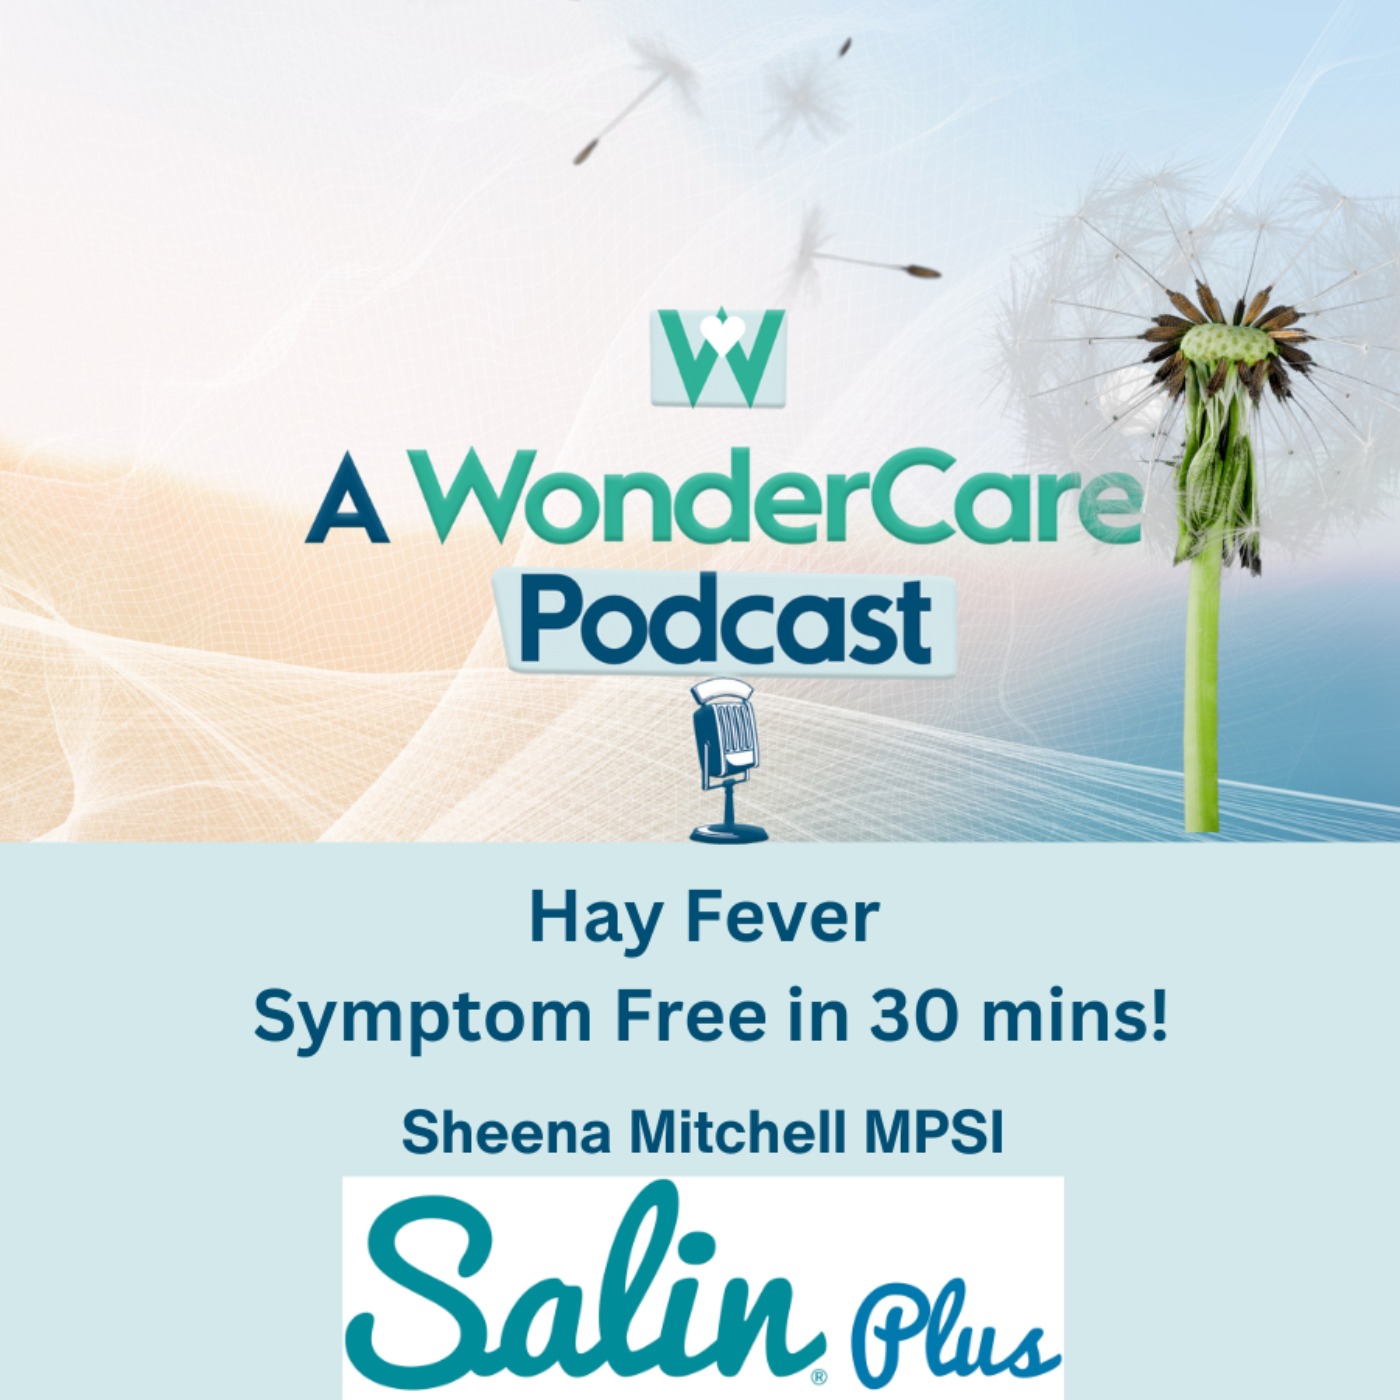 Hay Fever - Symptom Free in 30 mins!